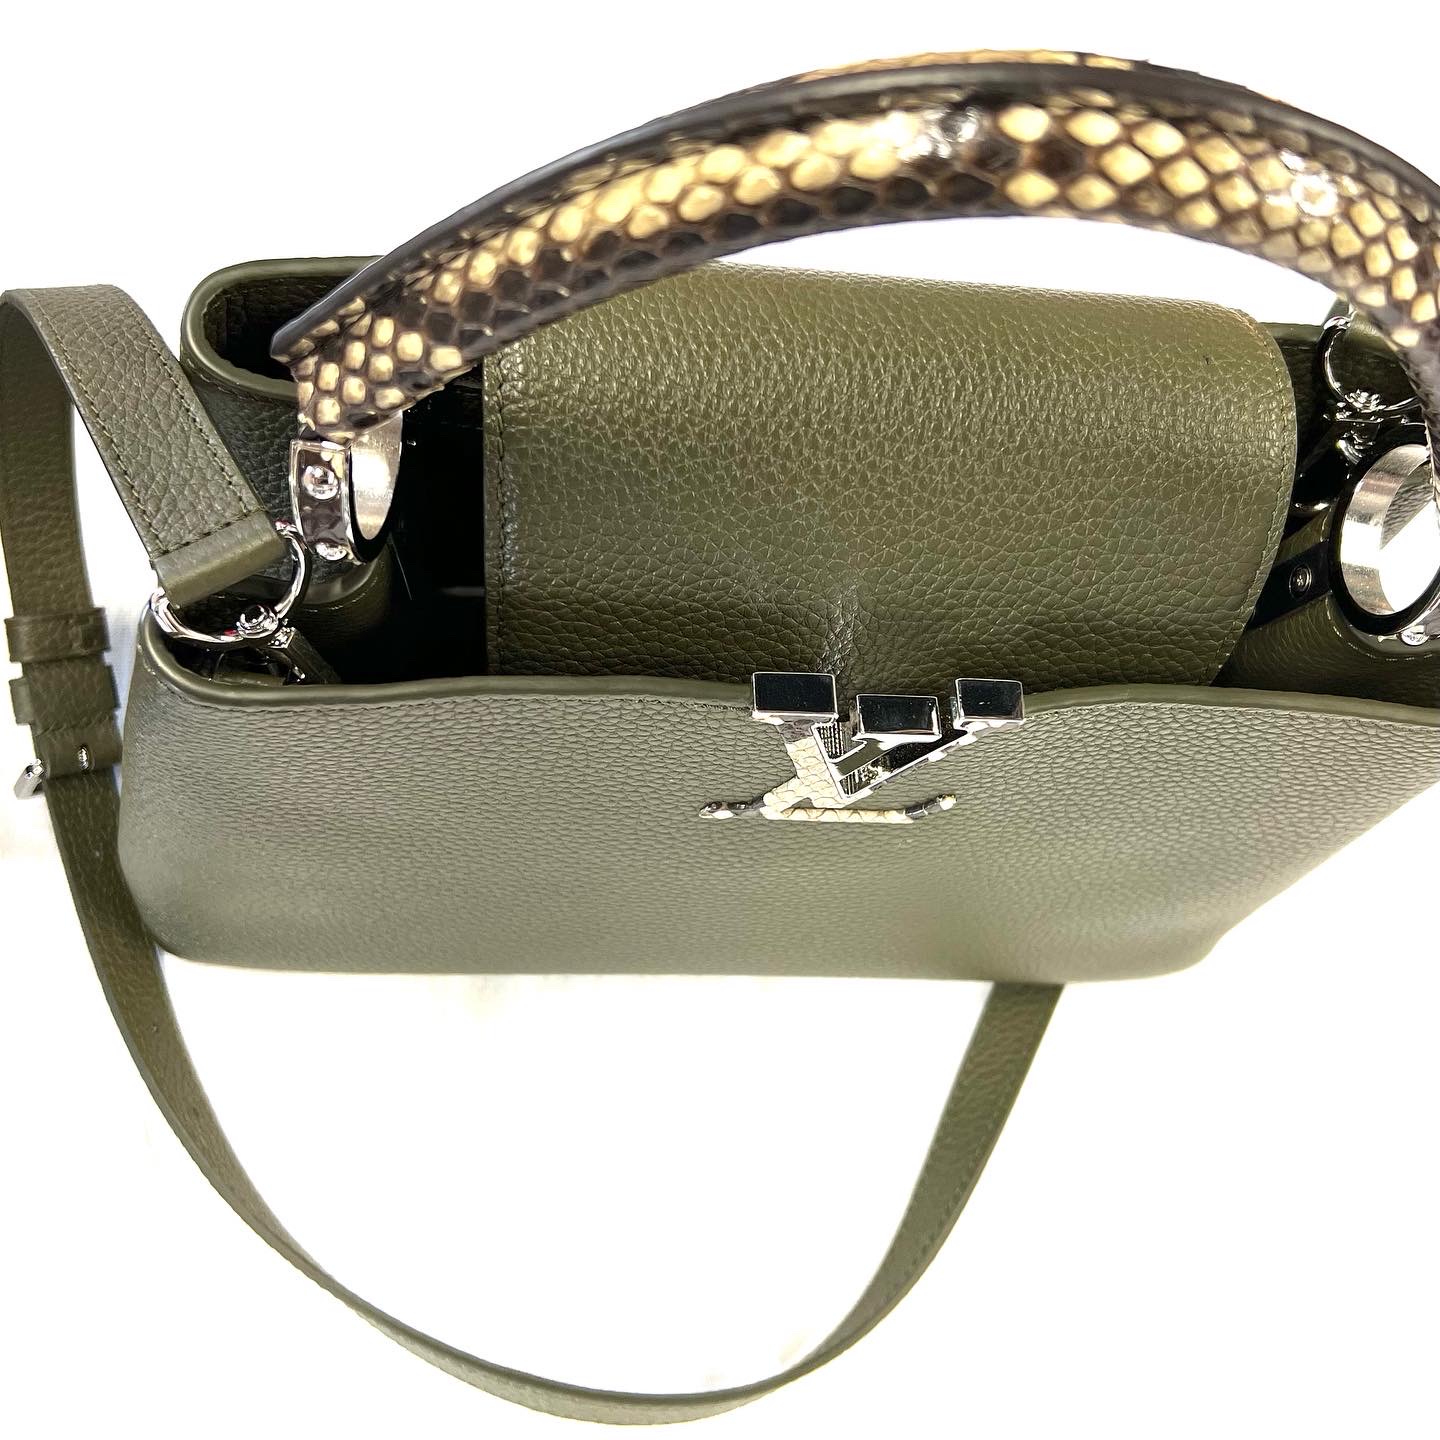 Louis Vuitton Capucines MM brand new bag w/ Python accents 2022